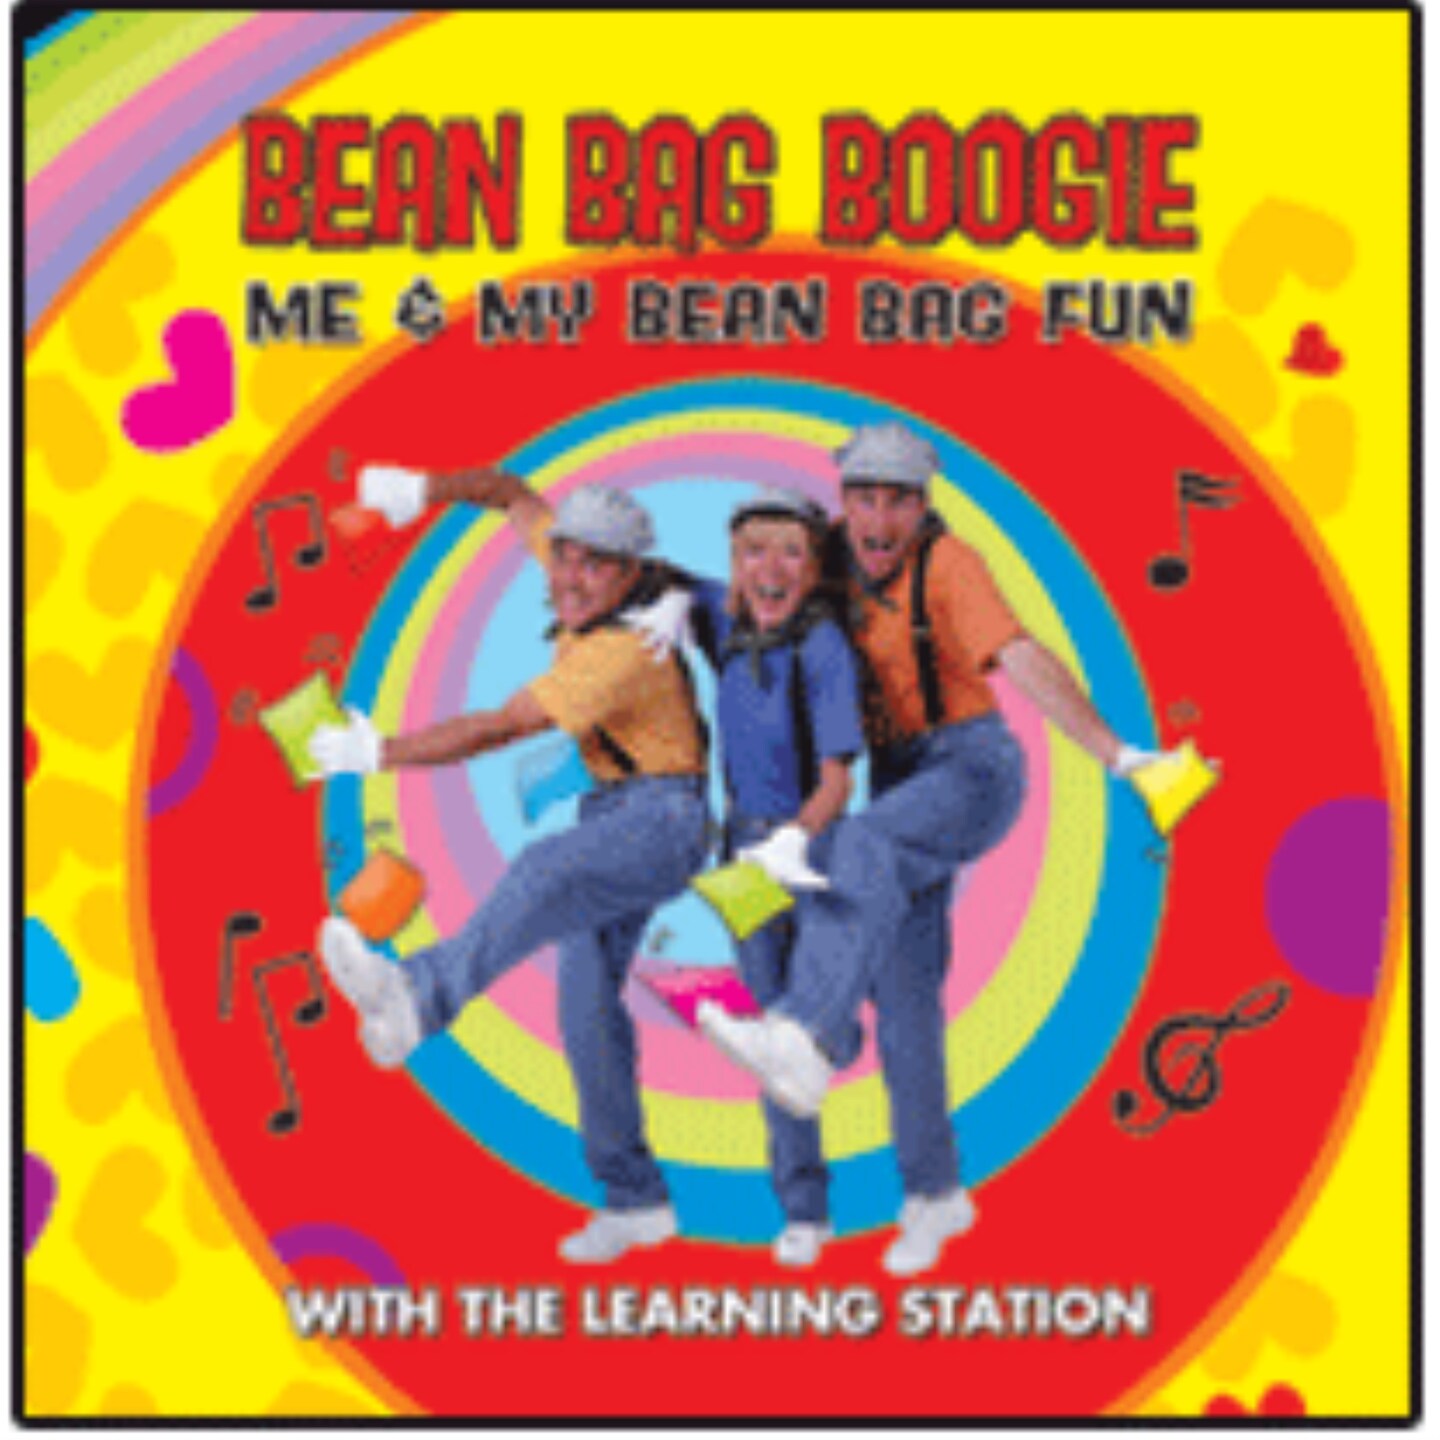 Bean Bag Boogie Educational CD